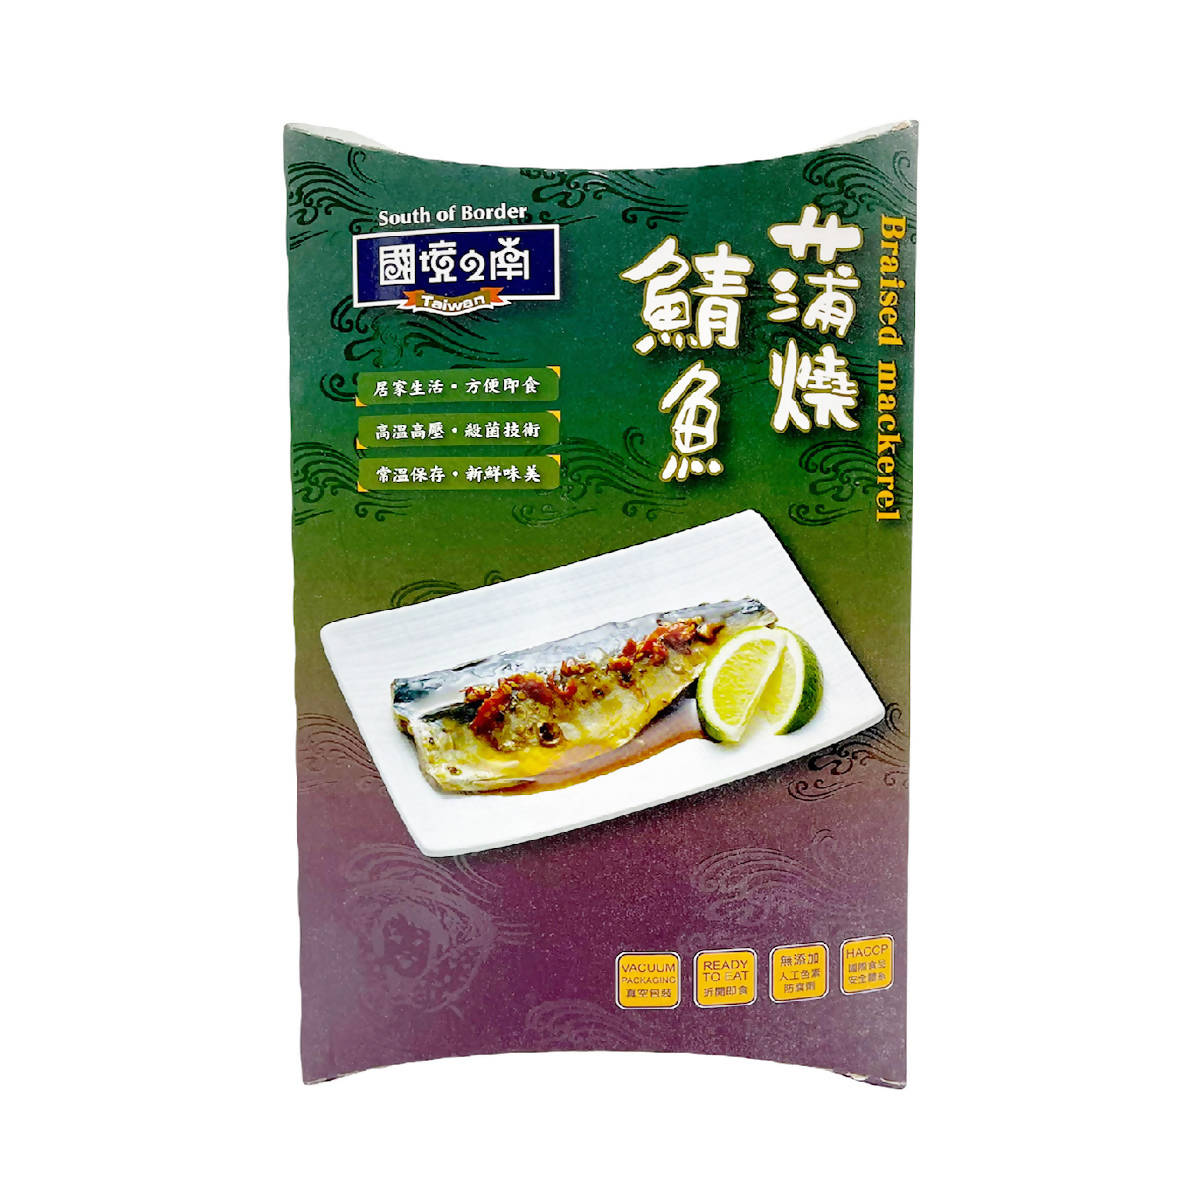 Taiwan Direct Mail [Proud China] DE CHUNG HUA FOODS SOUTH OF BORDER Pork Mackerel 130g 